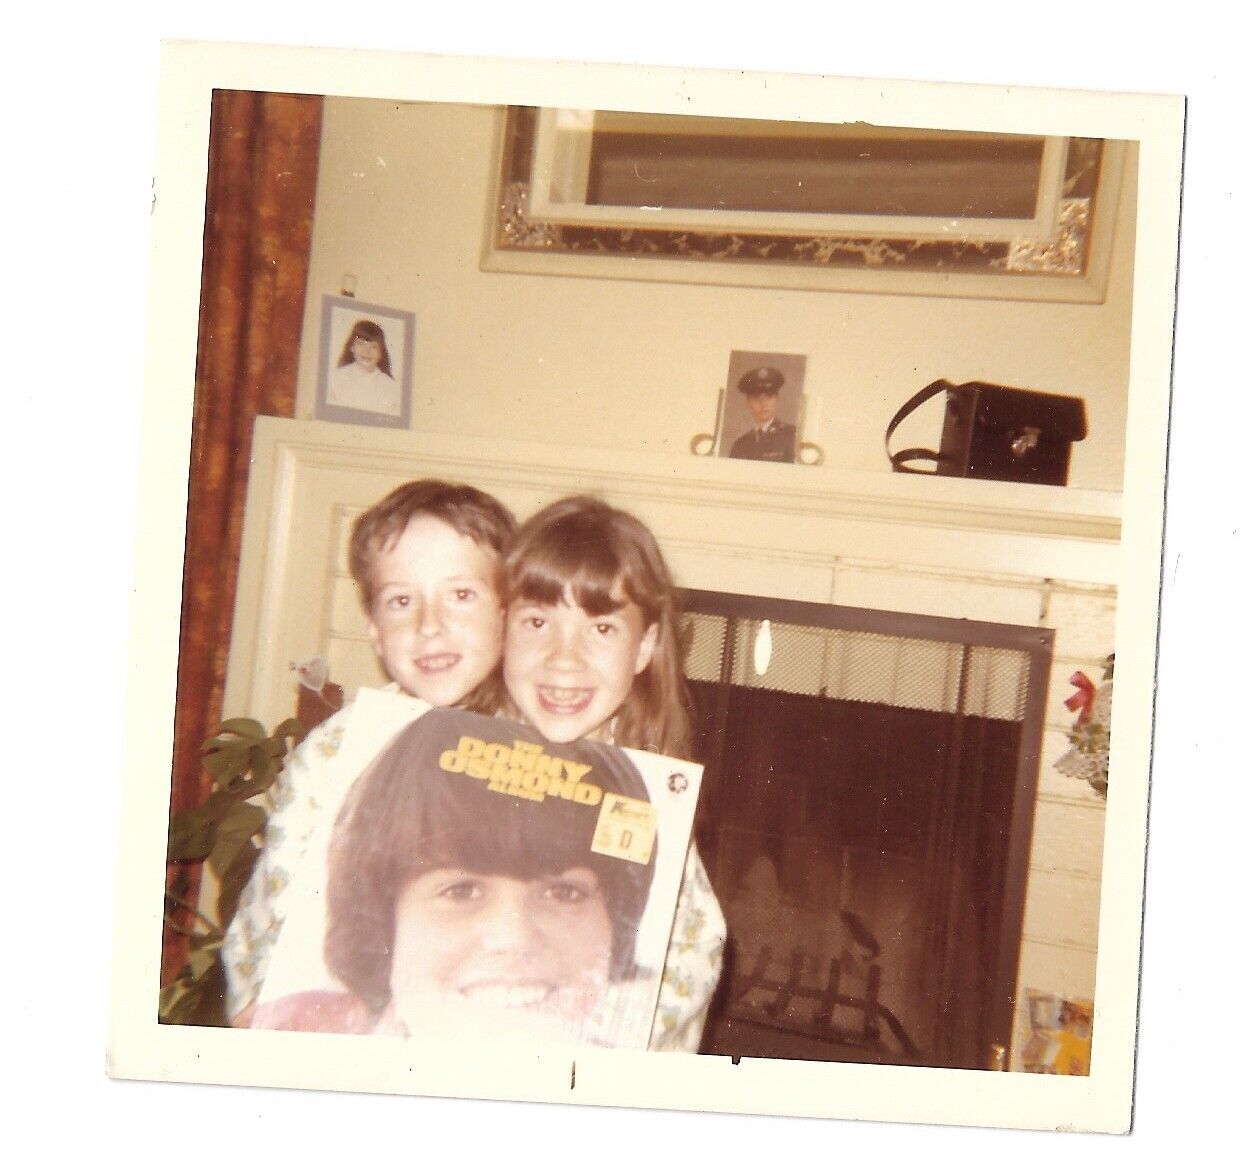 Vintage 1970s Boy + Girl Kids with DONNY OSMOND RECORD ALBUM Photo